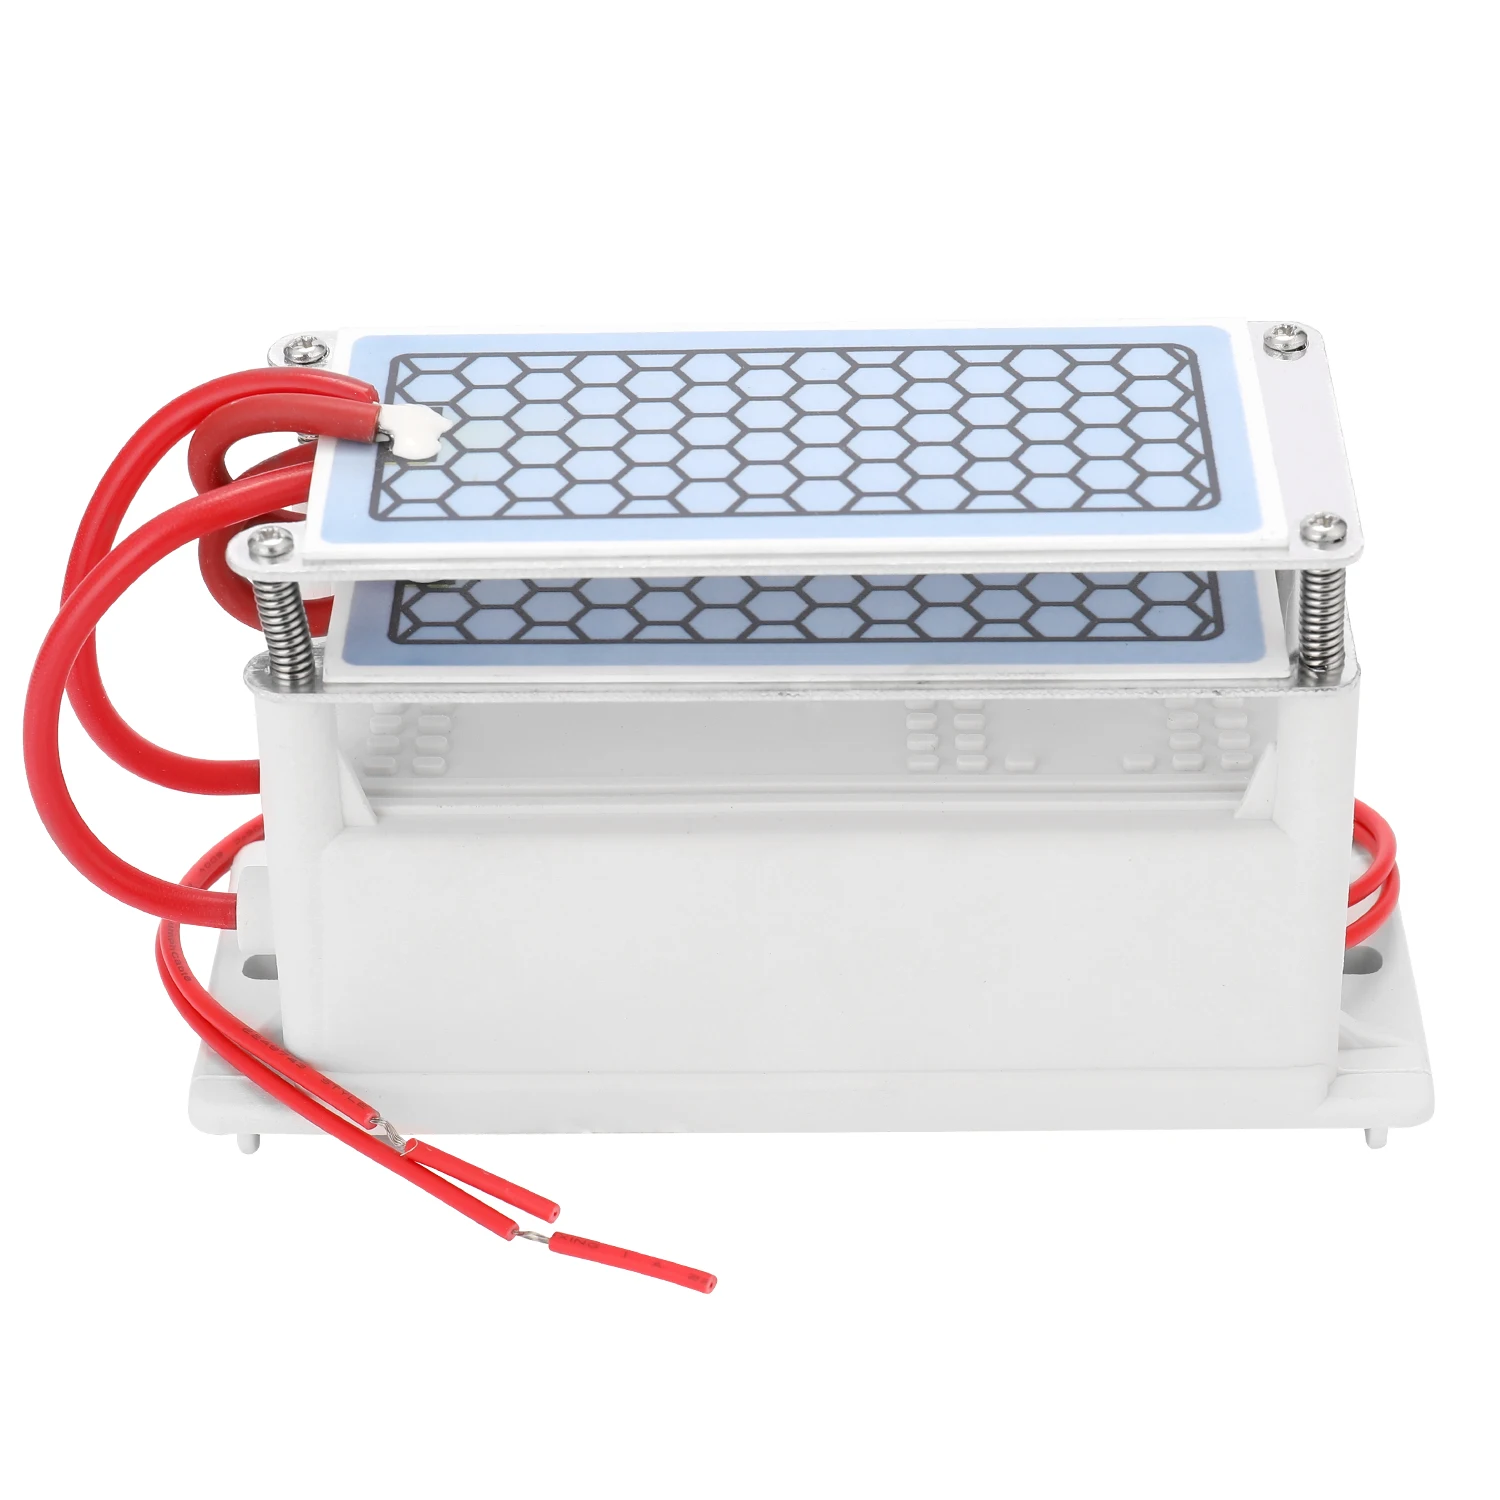 Portable Ozone Generator 10g//h Ozonizer Air Water Purifier Sterilizer Treatment